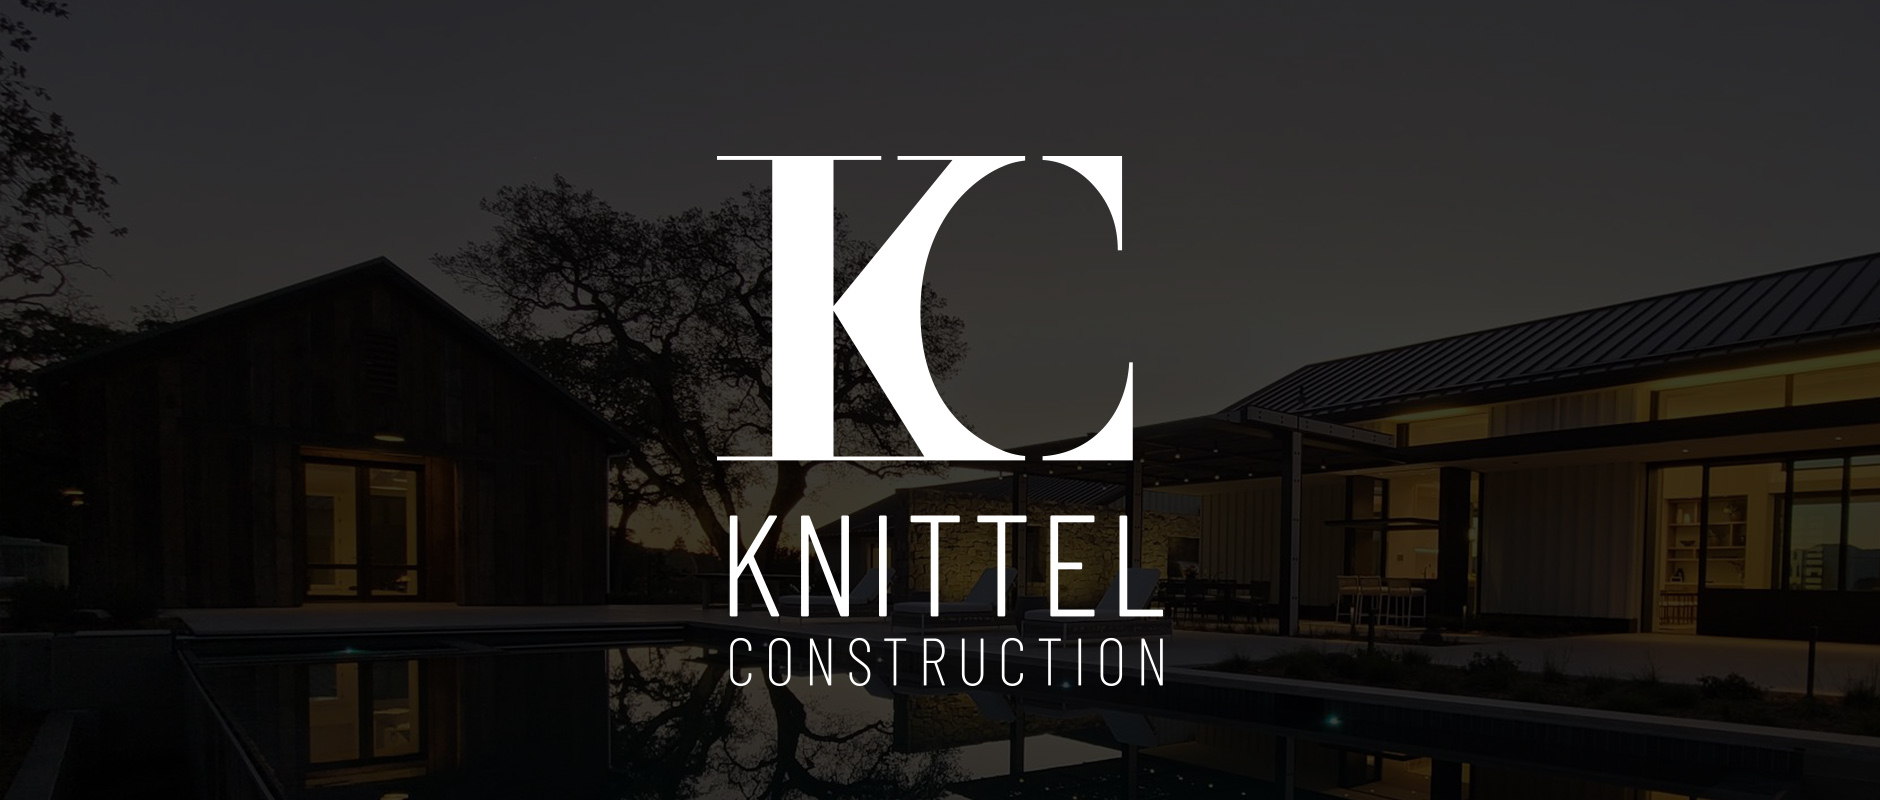 Knittel Construction Logo Design